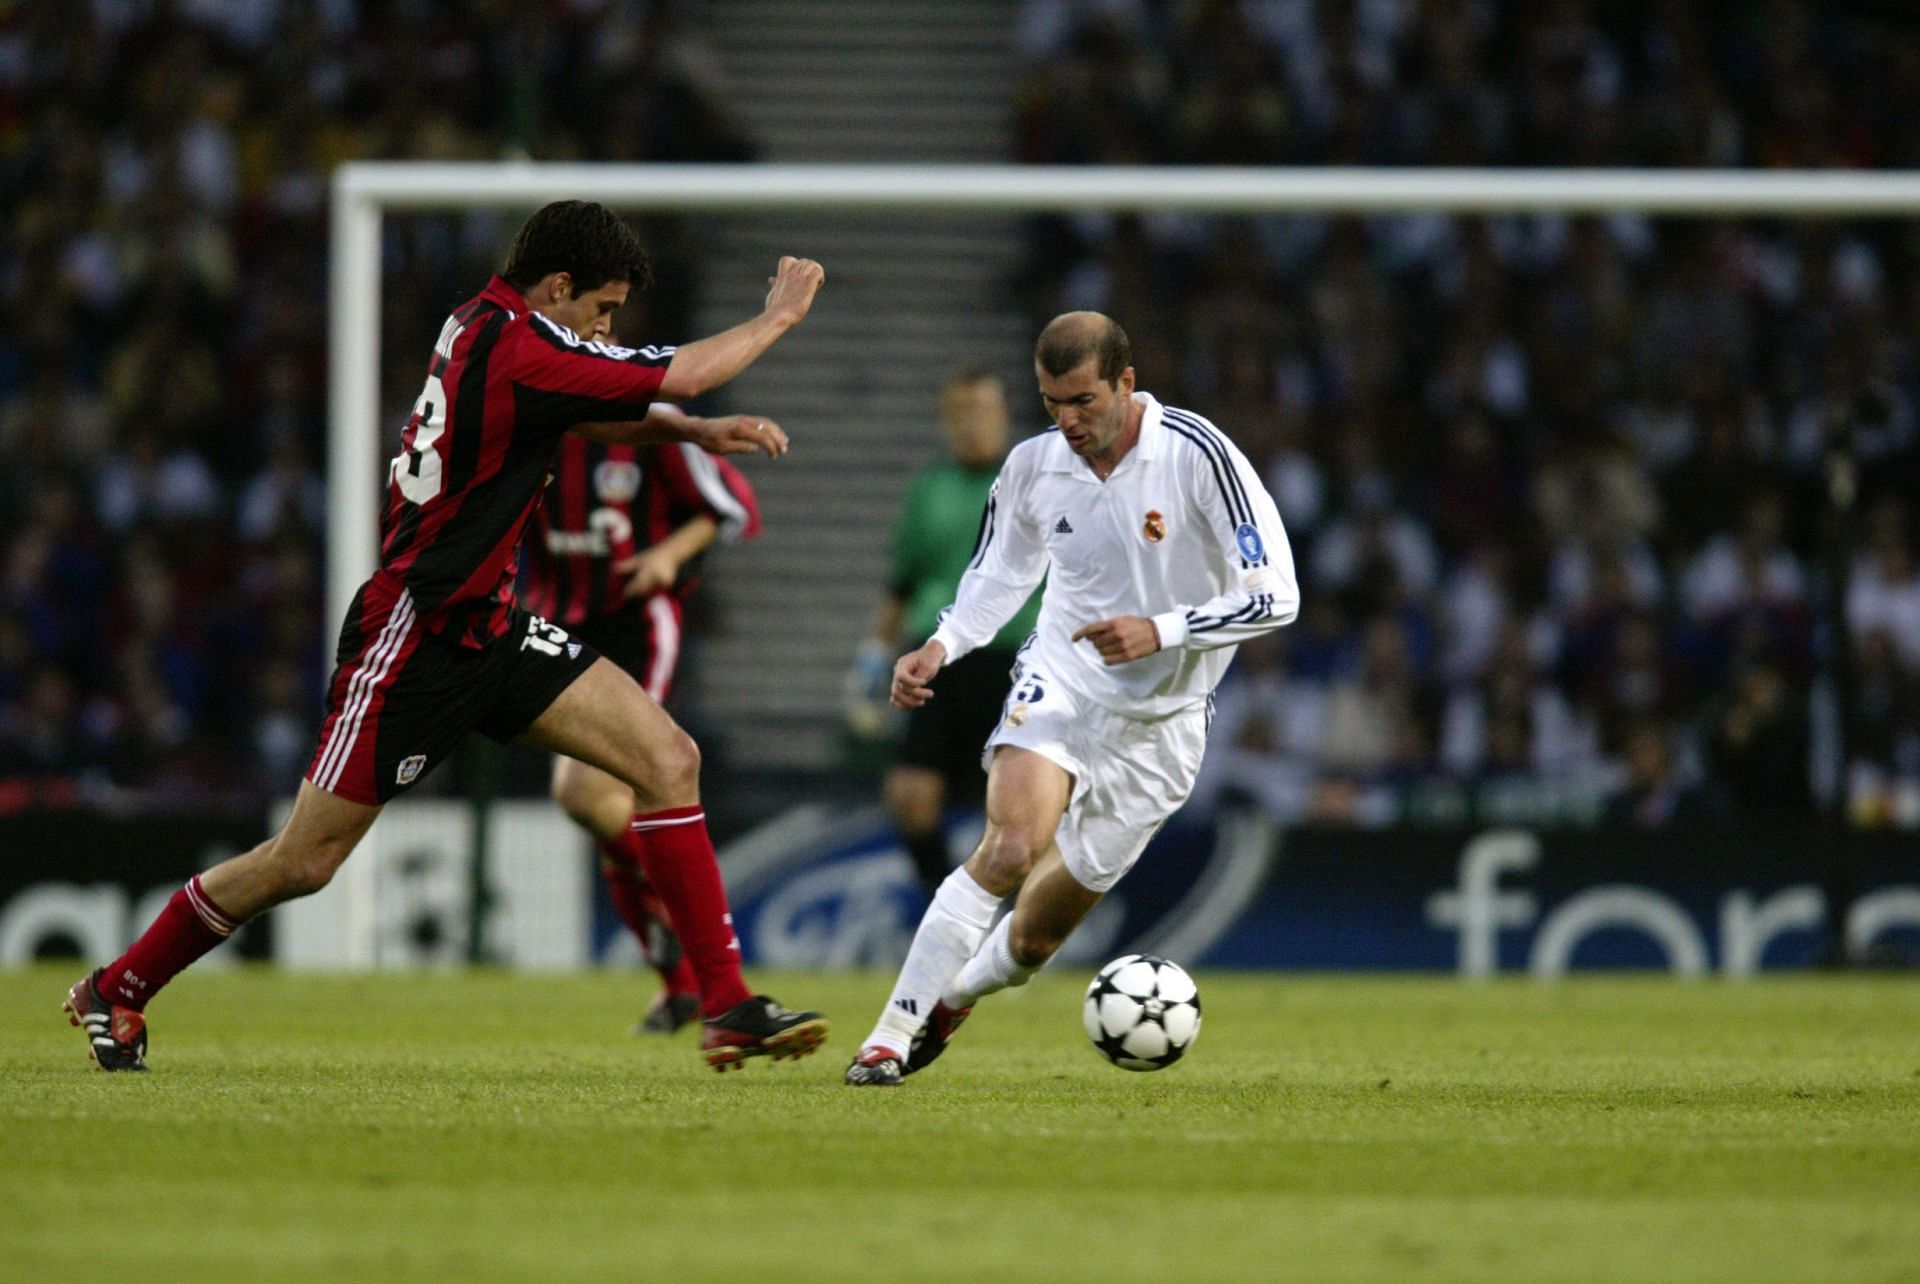 Zinedine Zidane of Real Madrid and Michael Ballack of Bayer Leverkusen